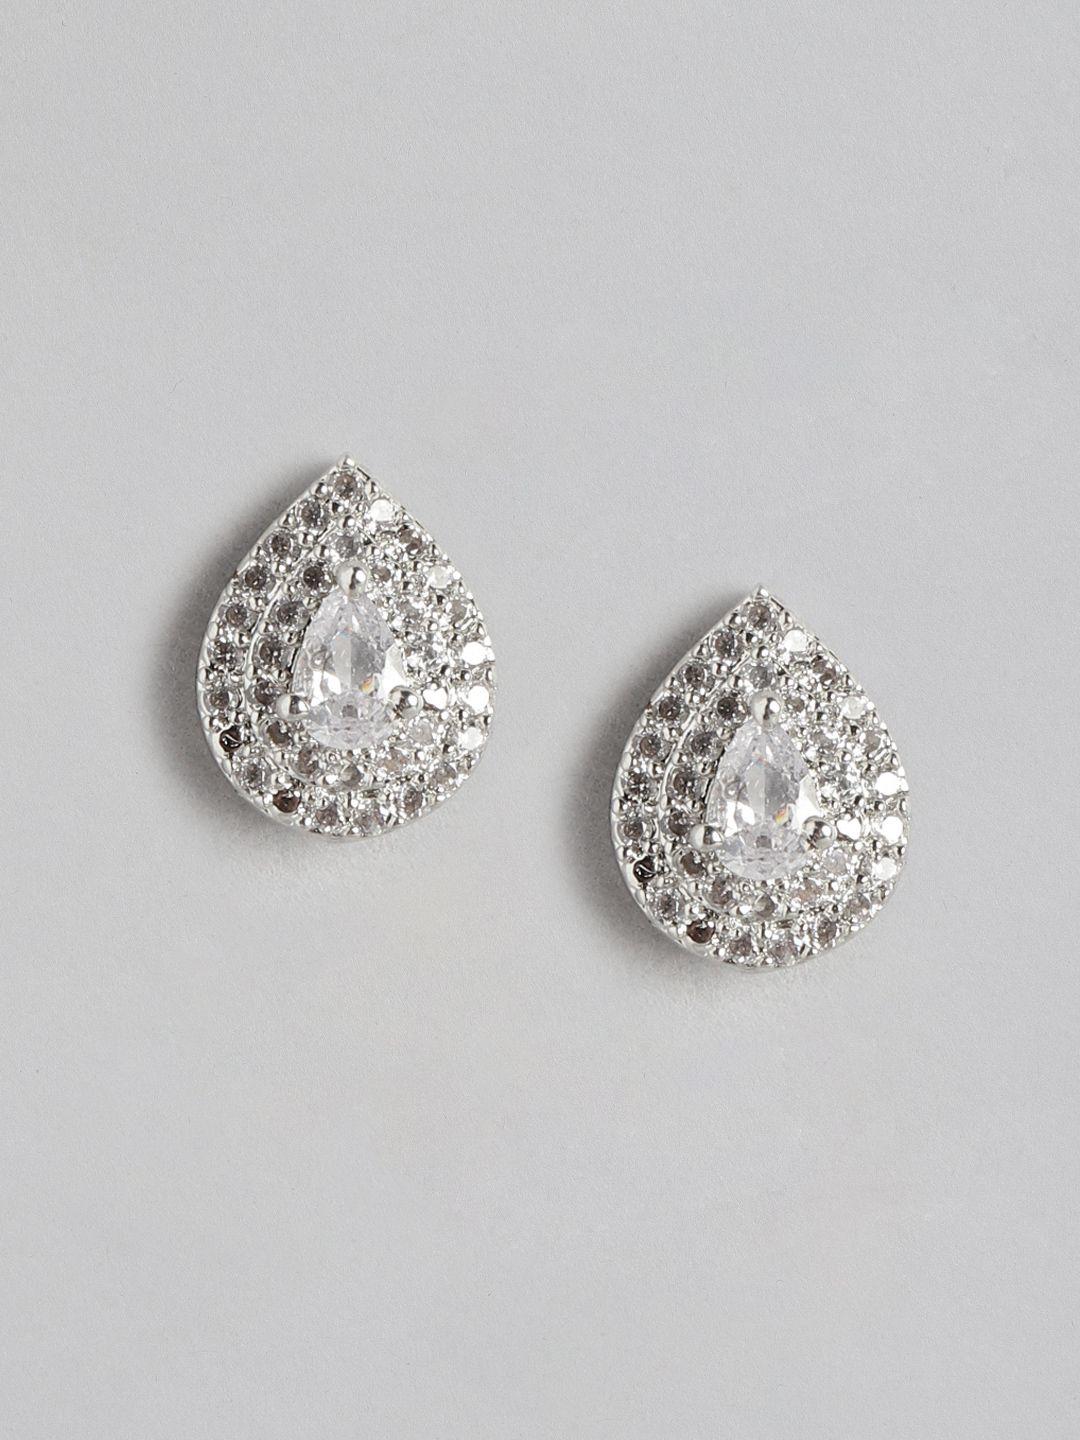 aadvik designs silver-toned teardrop shaped ad studded studs earrings